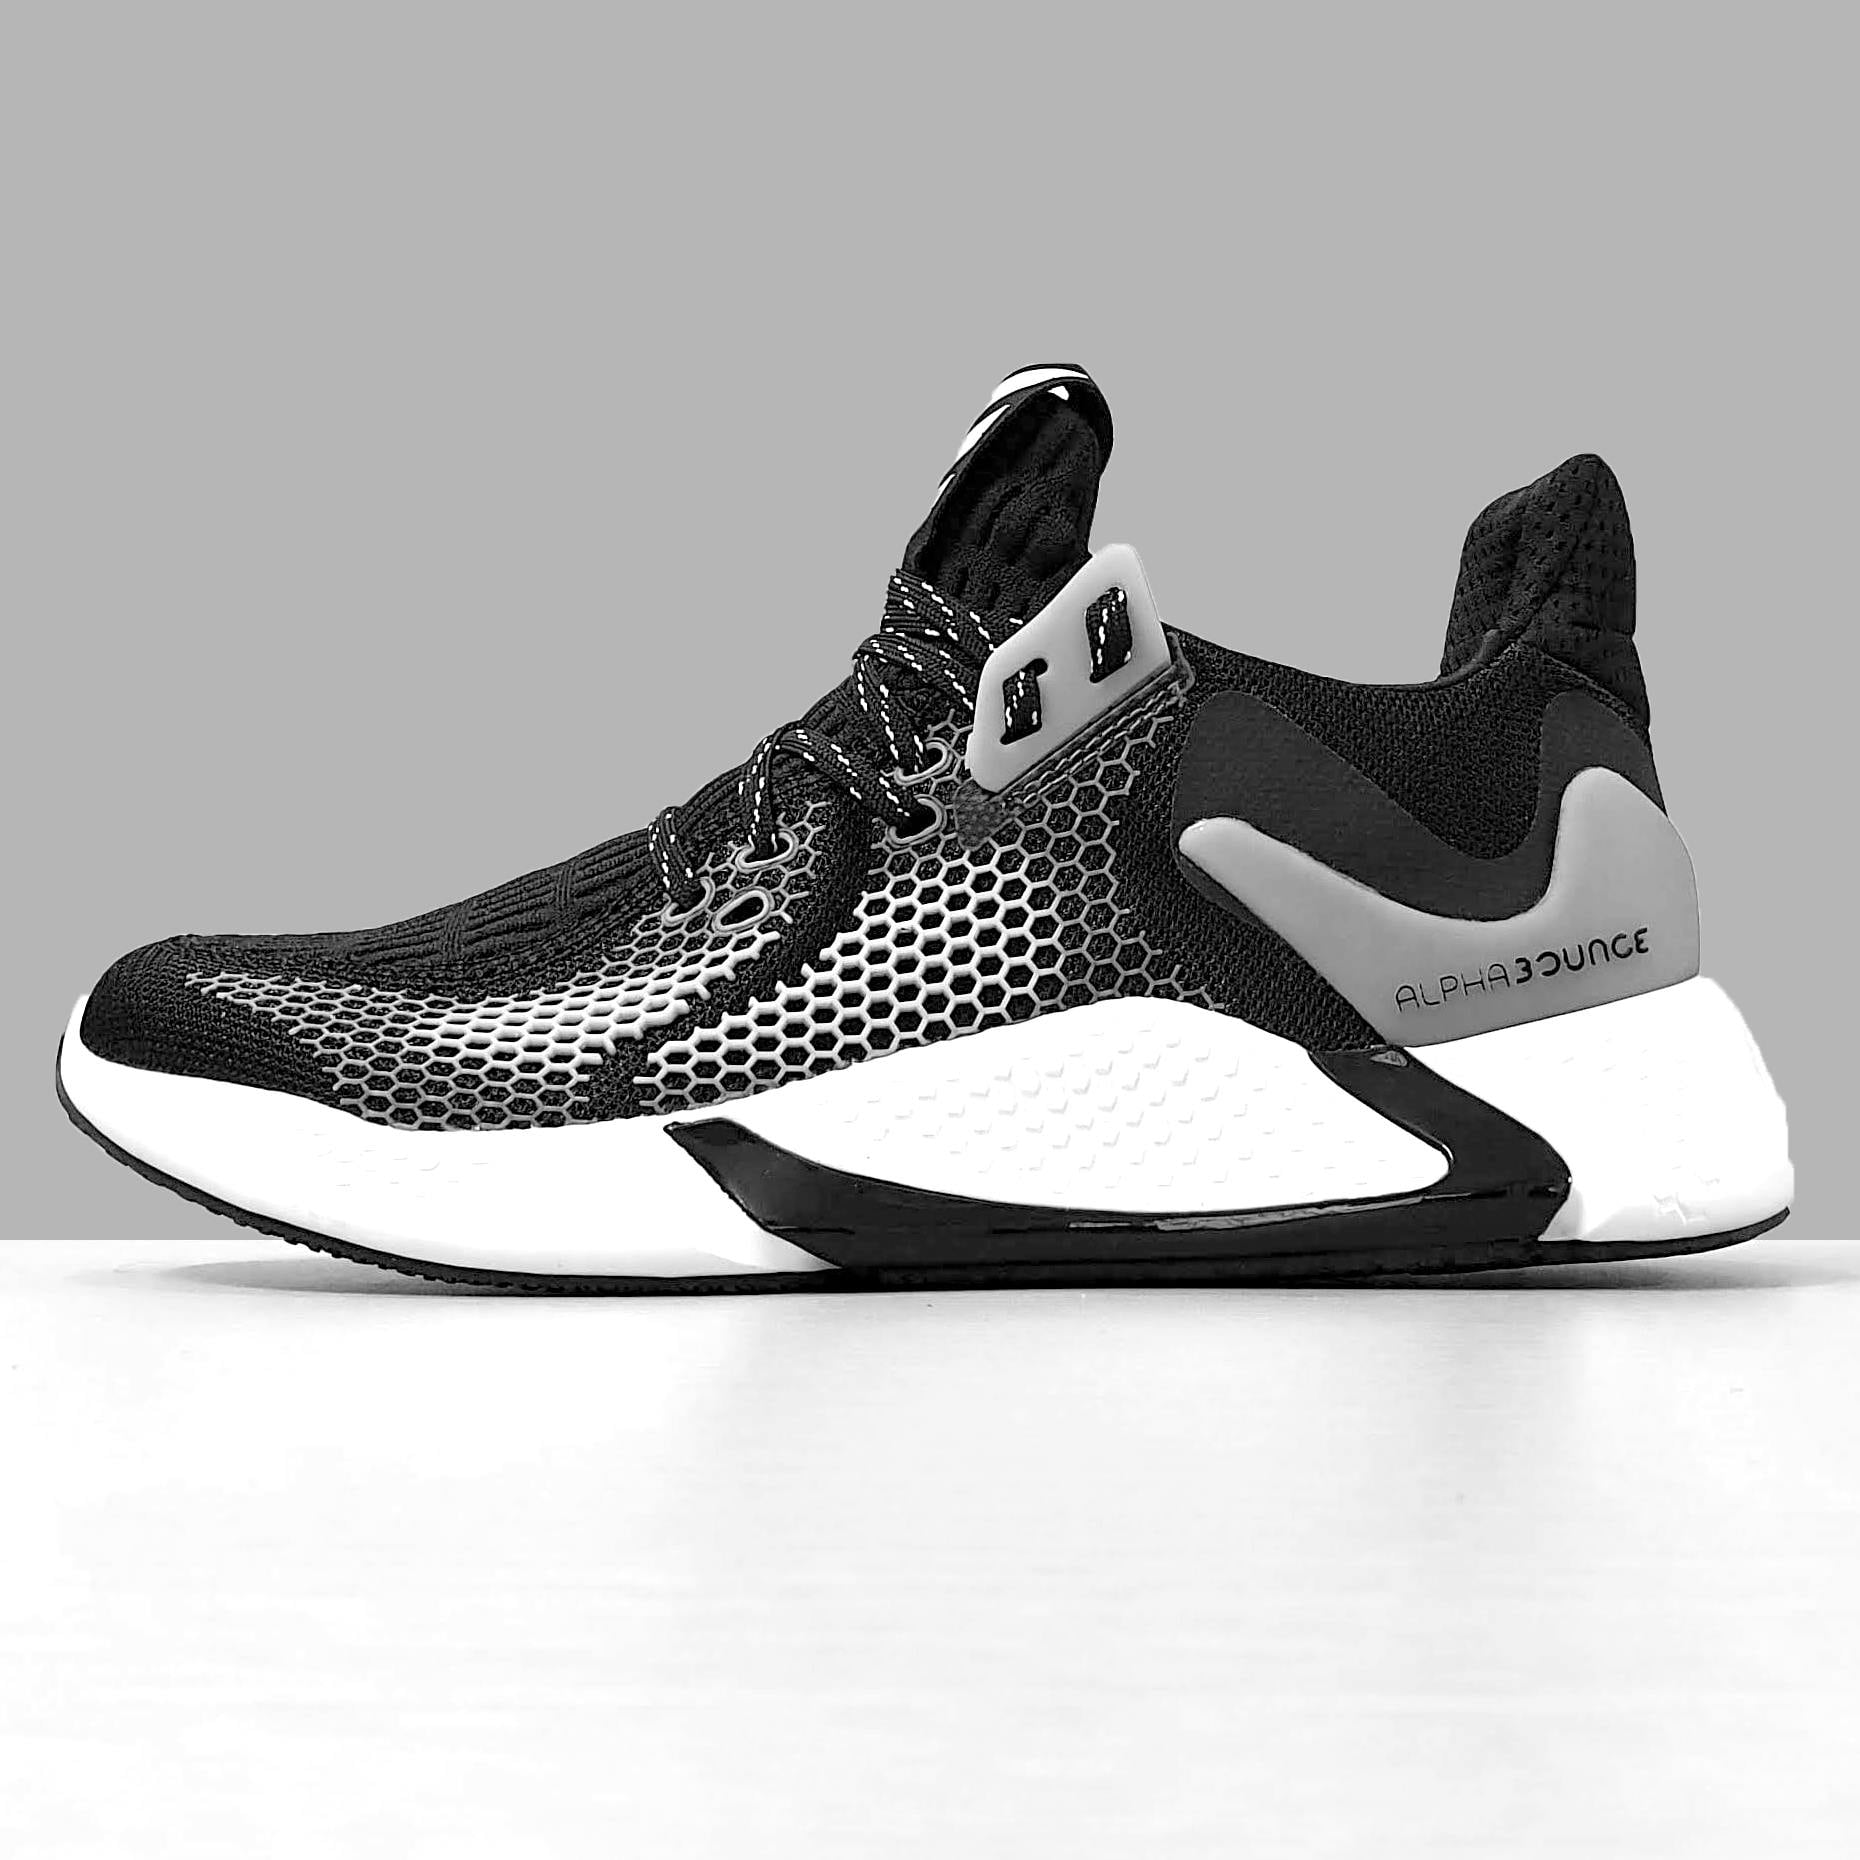 Giày adidas alphabounce 2020 màu trắng đen